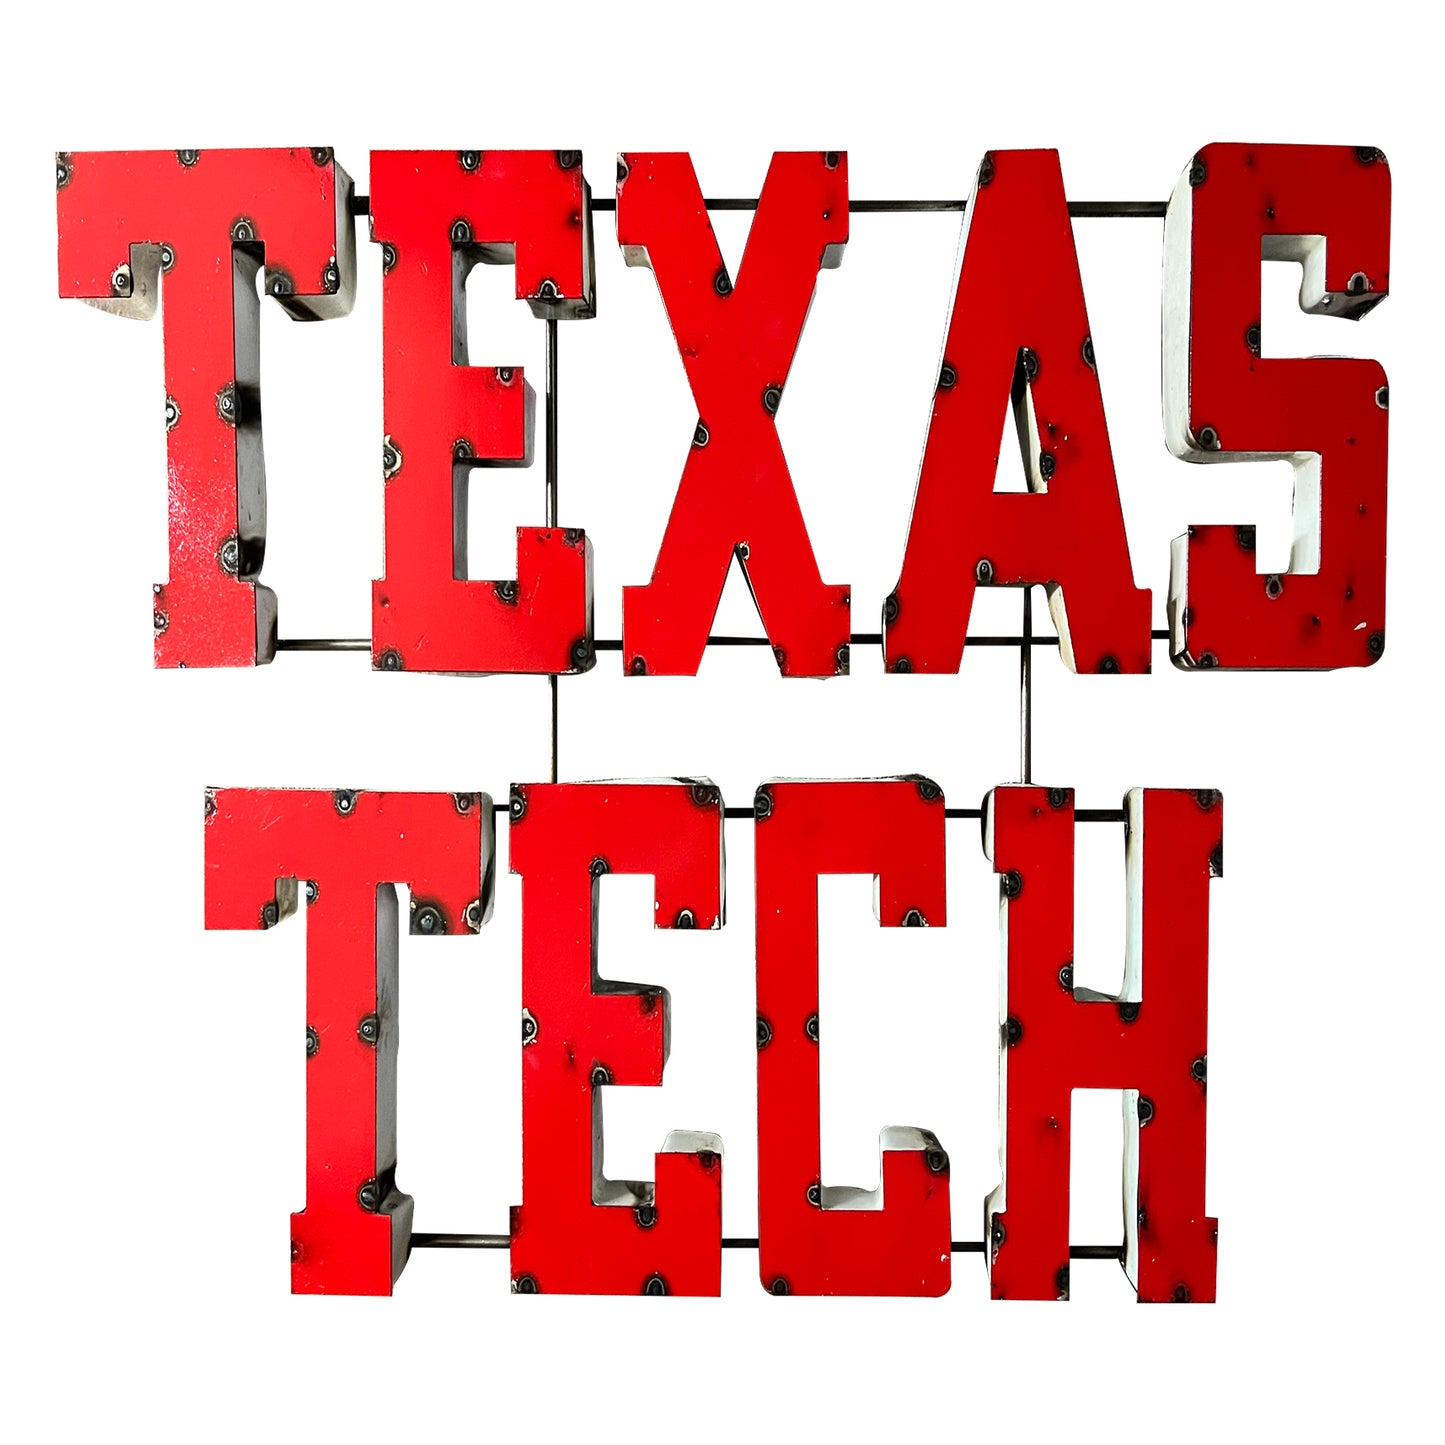 Texas Tech University "Texas Tech" Recycled Metal Wall Decor